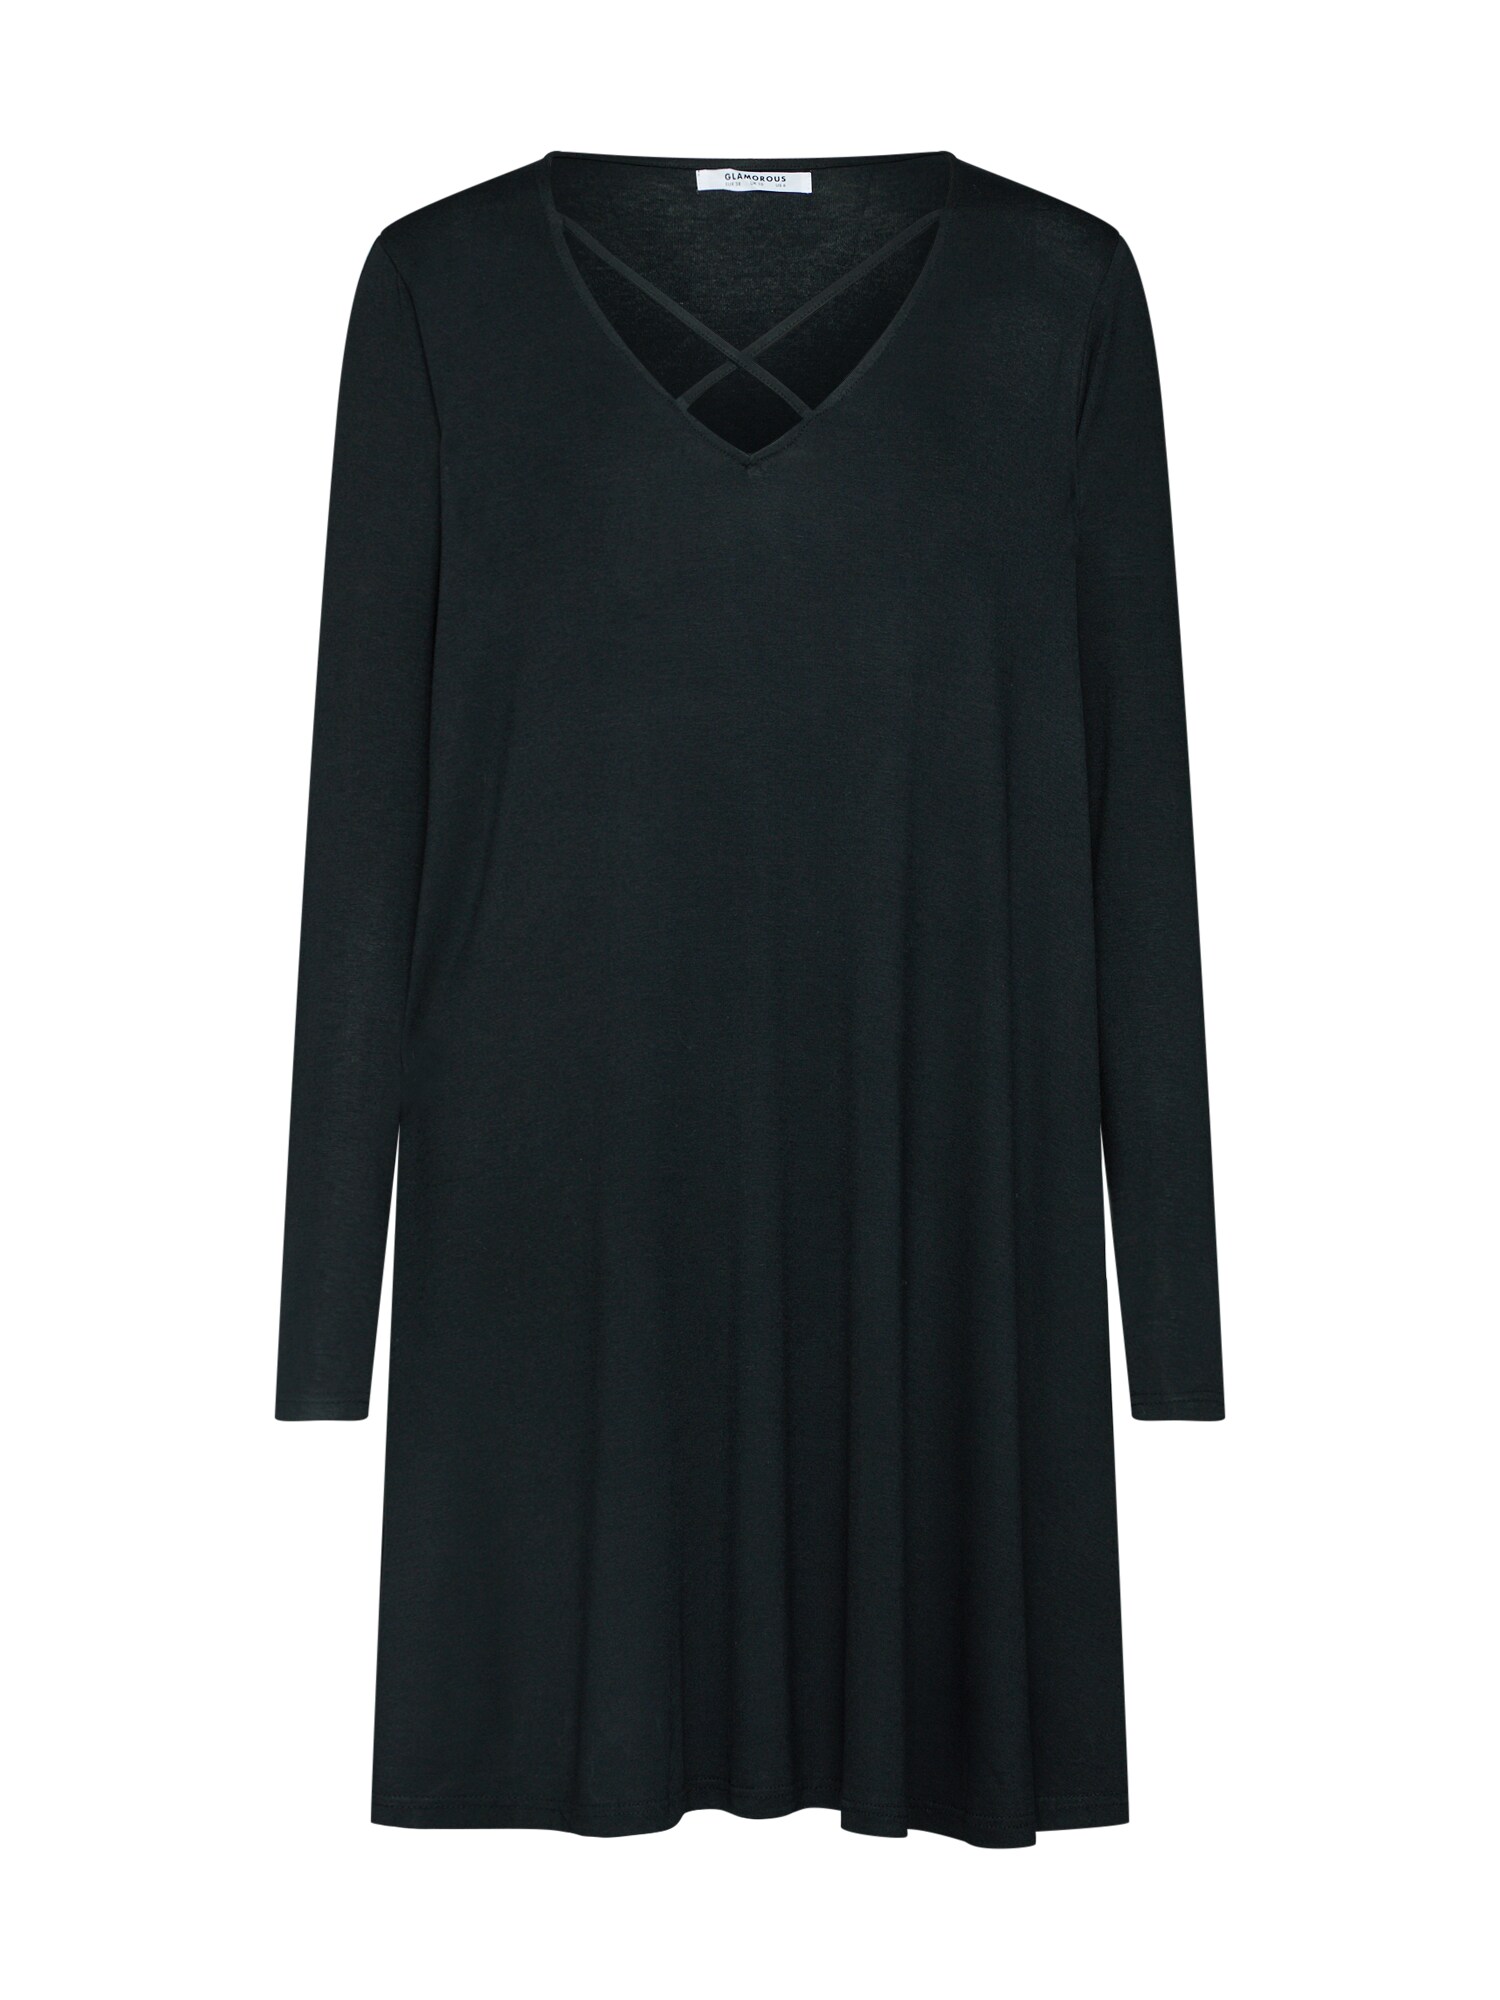 GLAMOROUS Kleid schwarz - Schwarzes Kleid